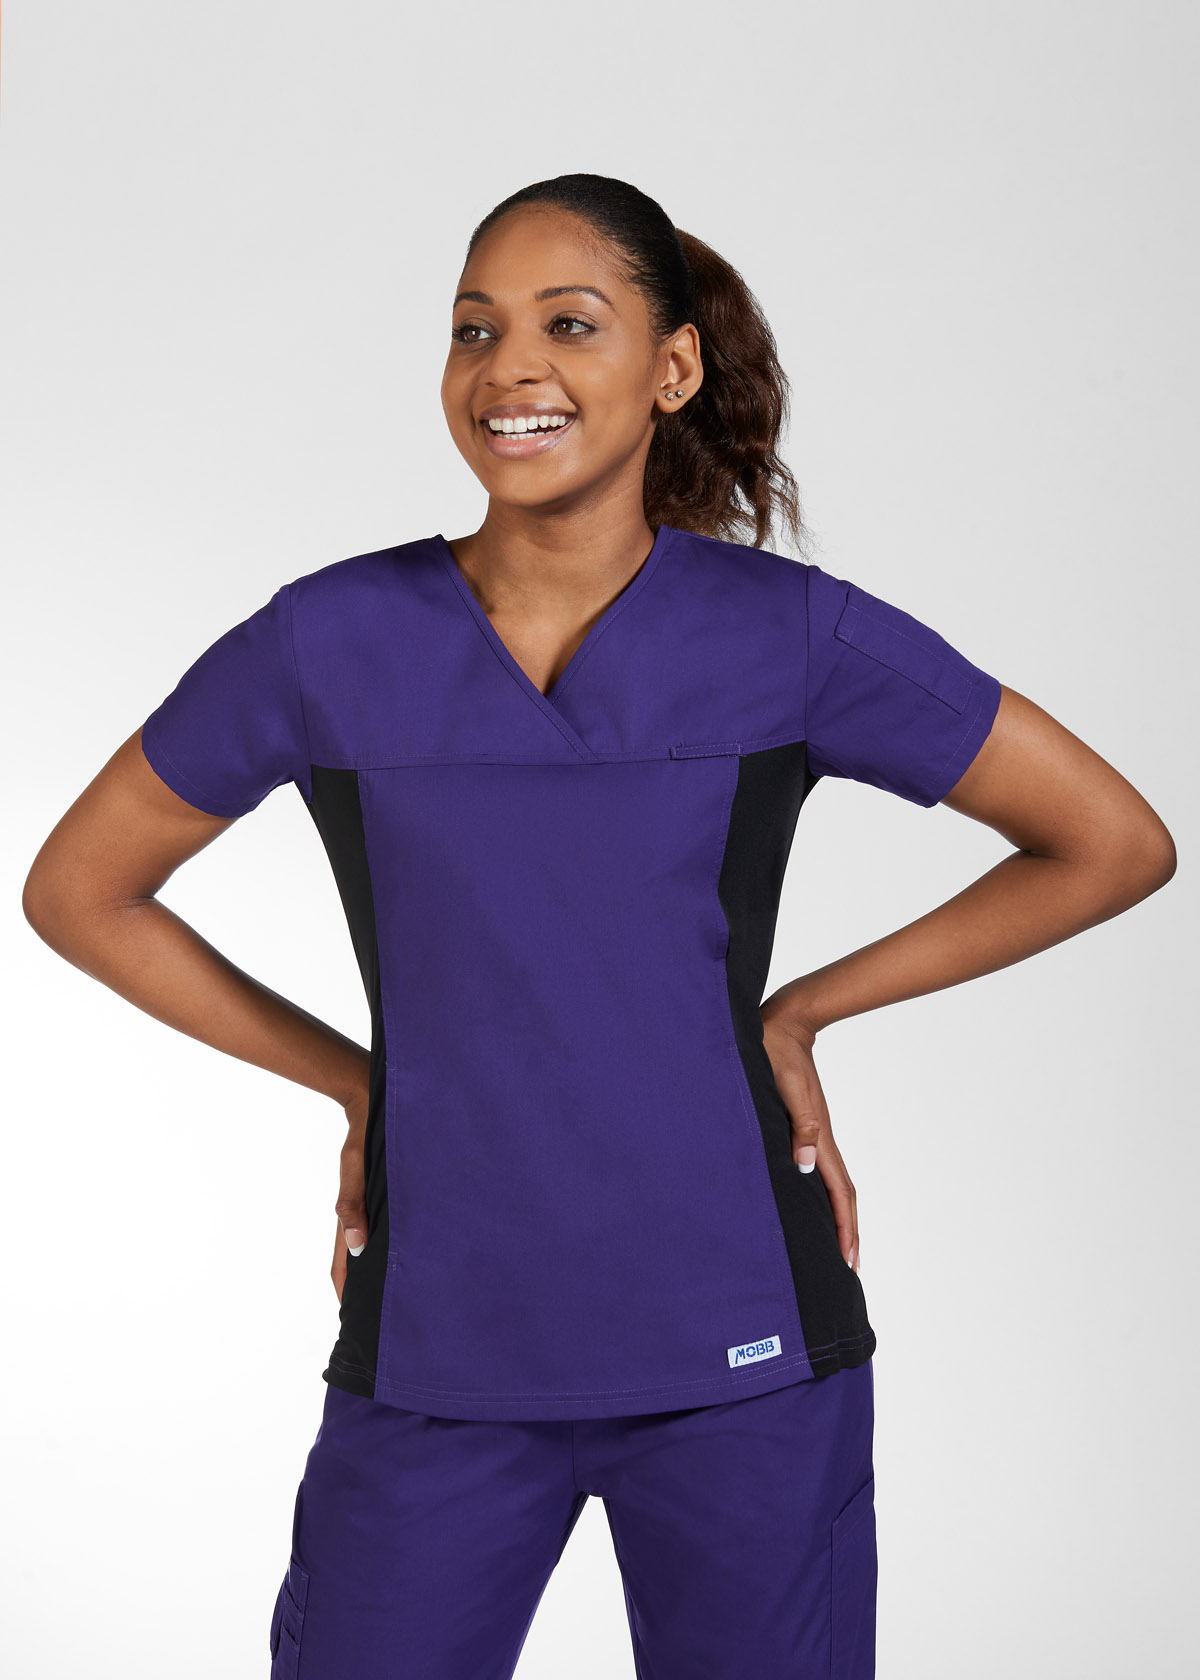 Flexi V-Neck Nurse Scrub Top by MOBB - Medical Calgary - Universal Work Wear